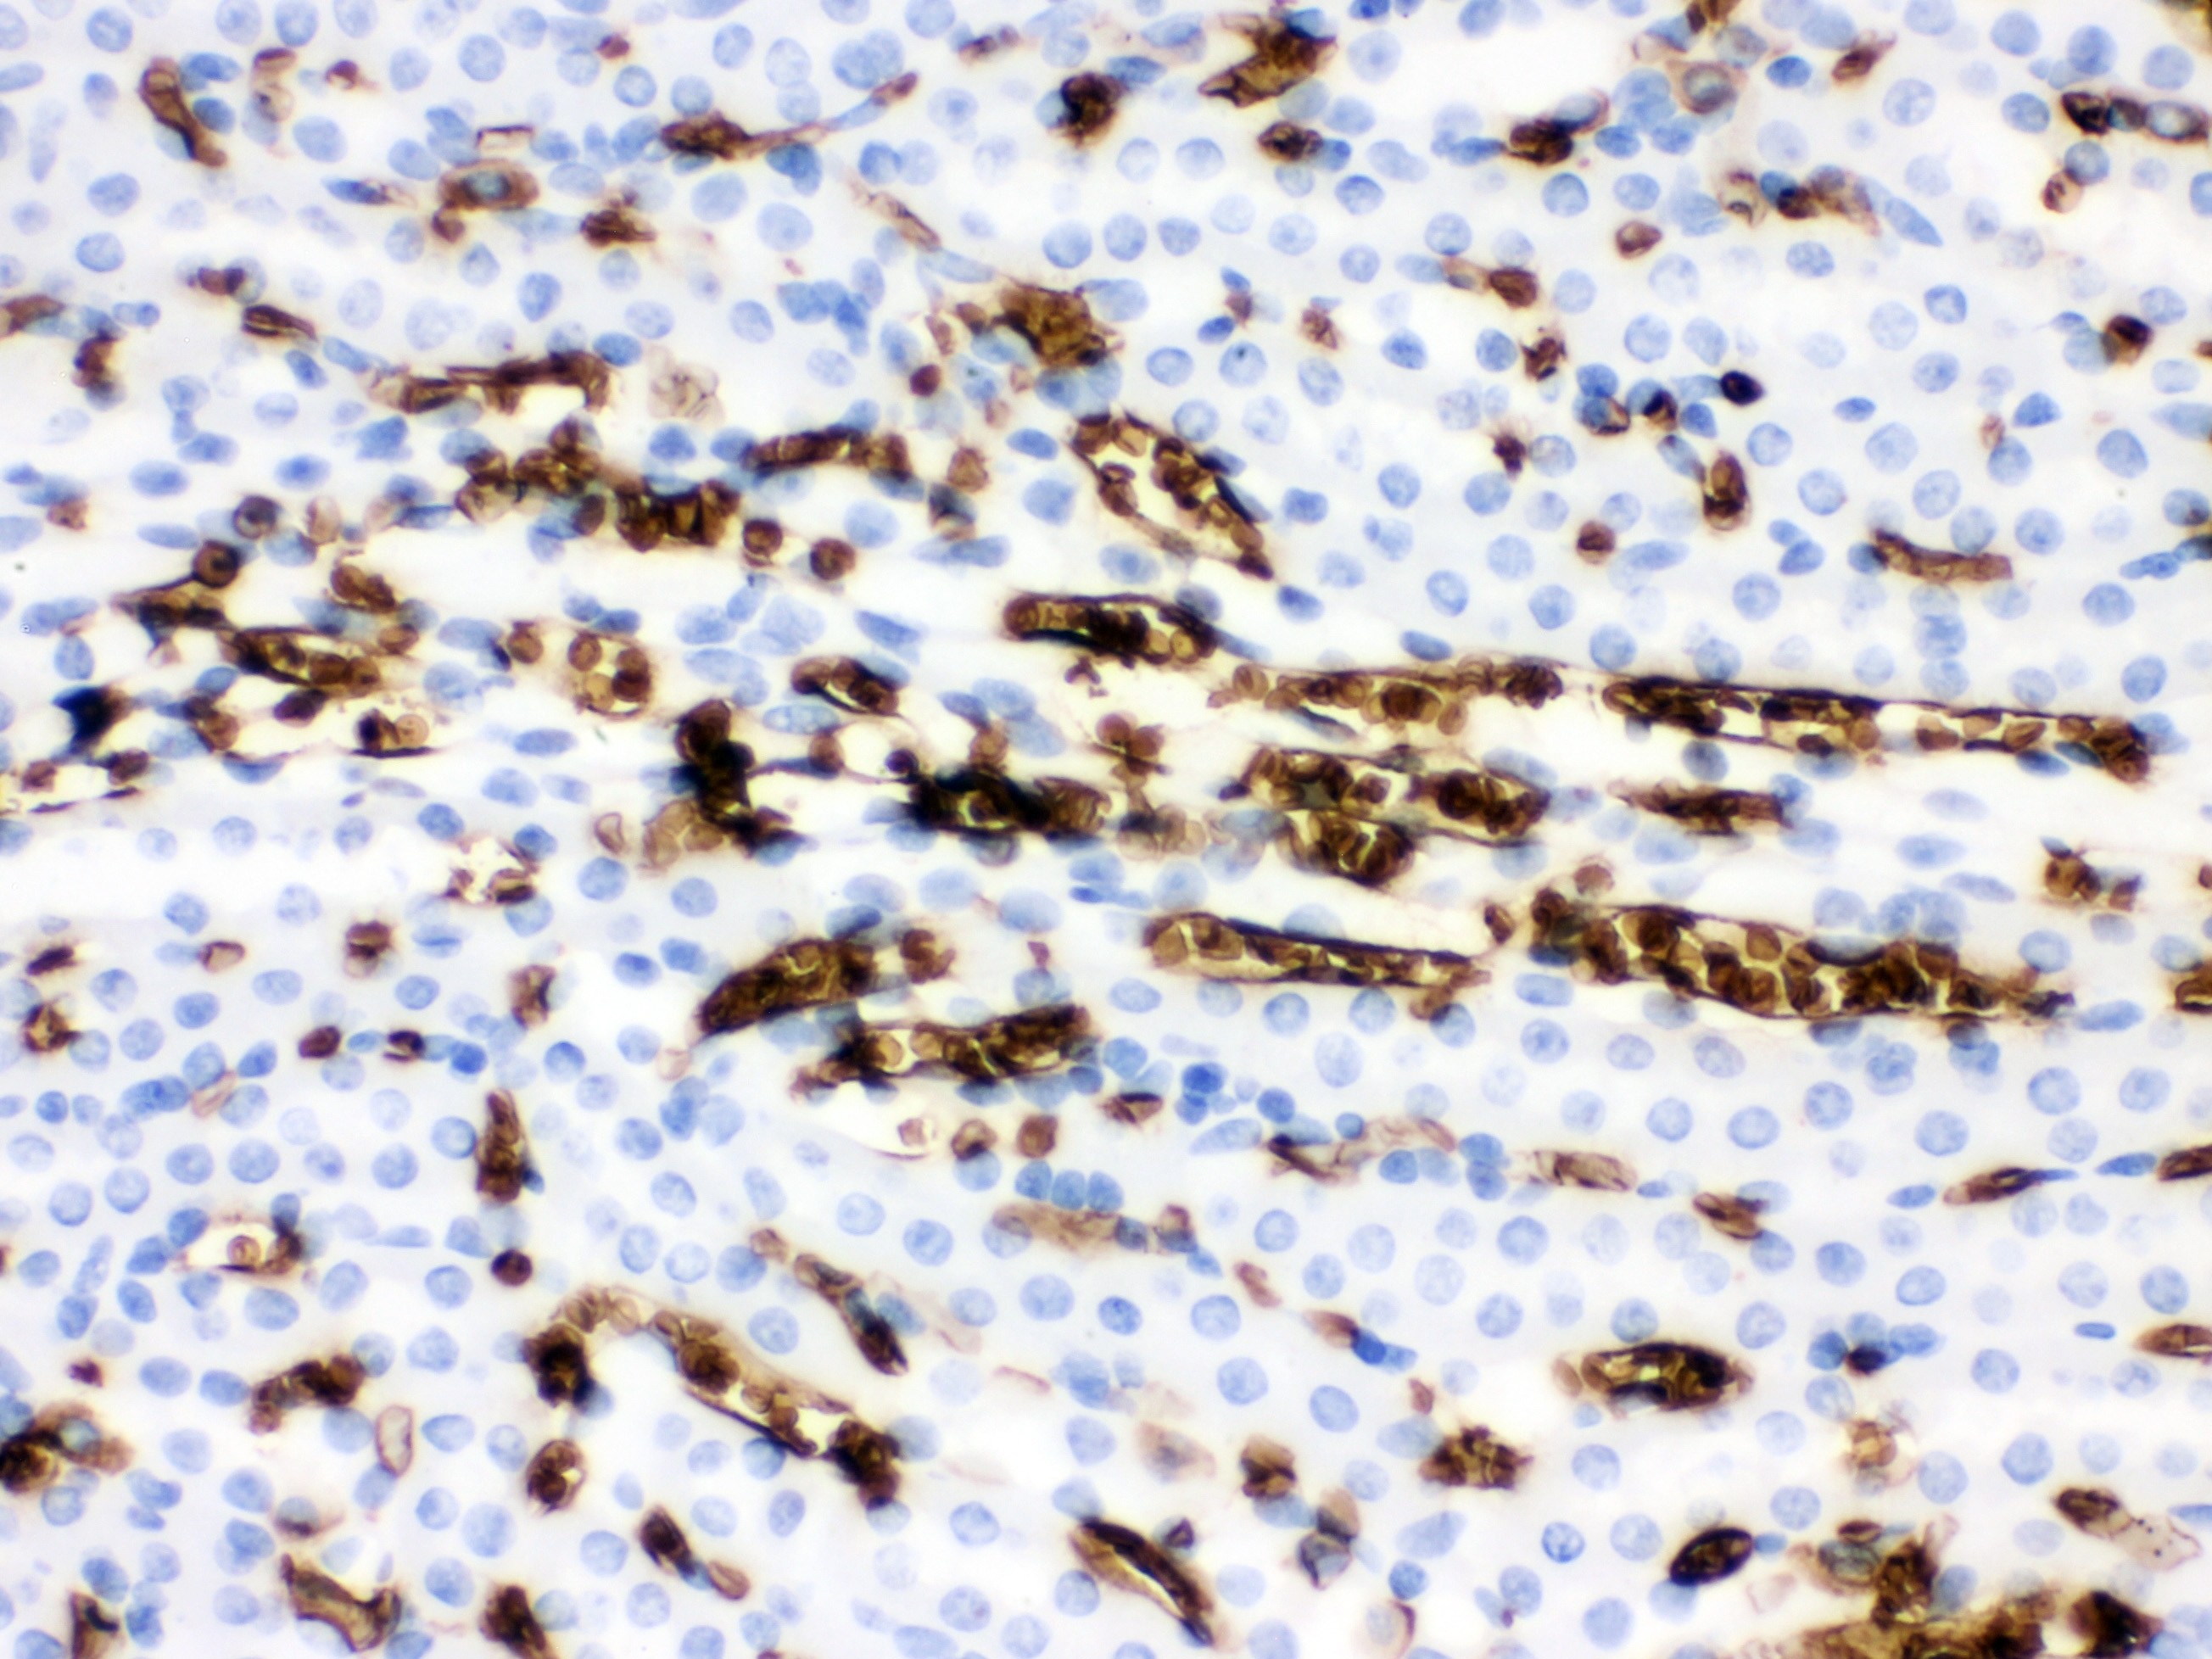 BAND 3 Antibody (OABB01920) in Mouse Kidney Tissue using Immunohistochemistry